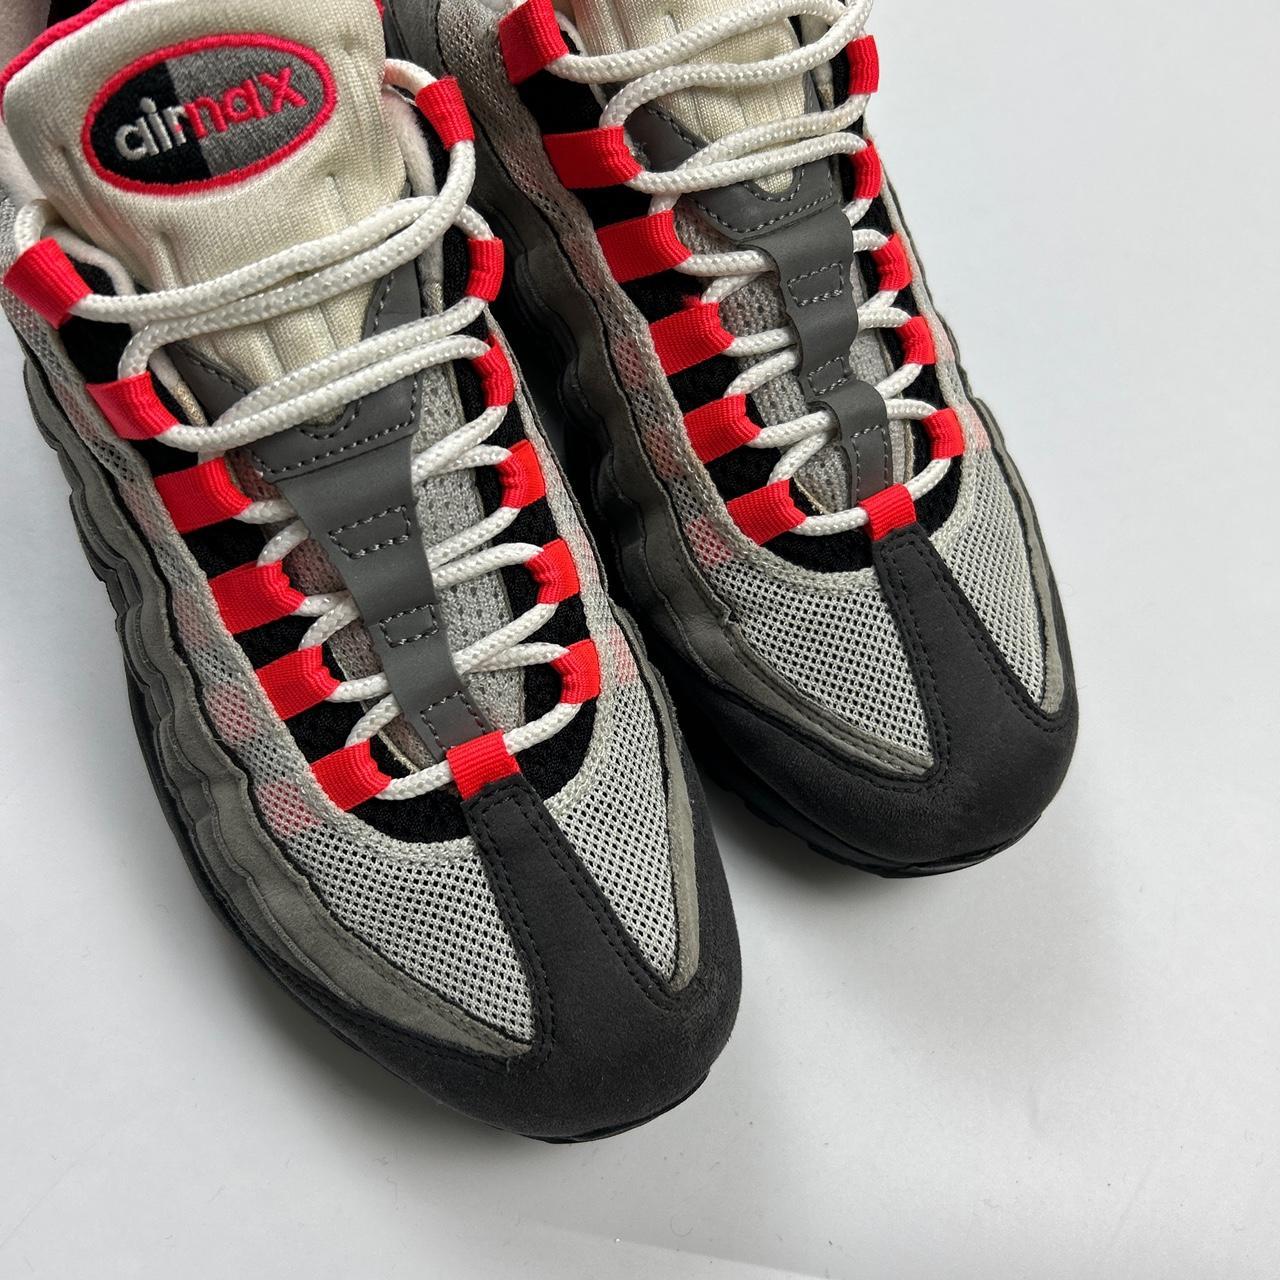 Nike Solar Red 95s (UK 6)